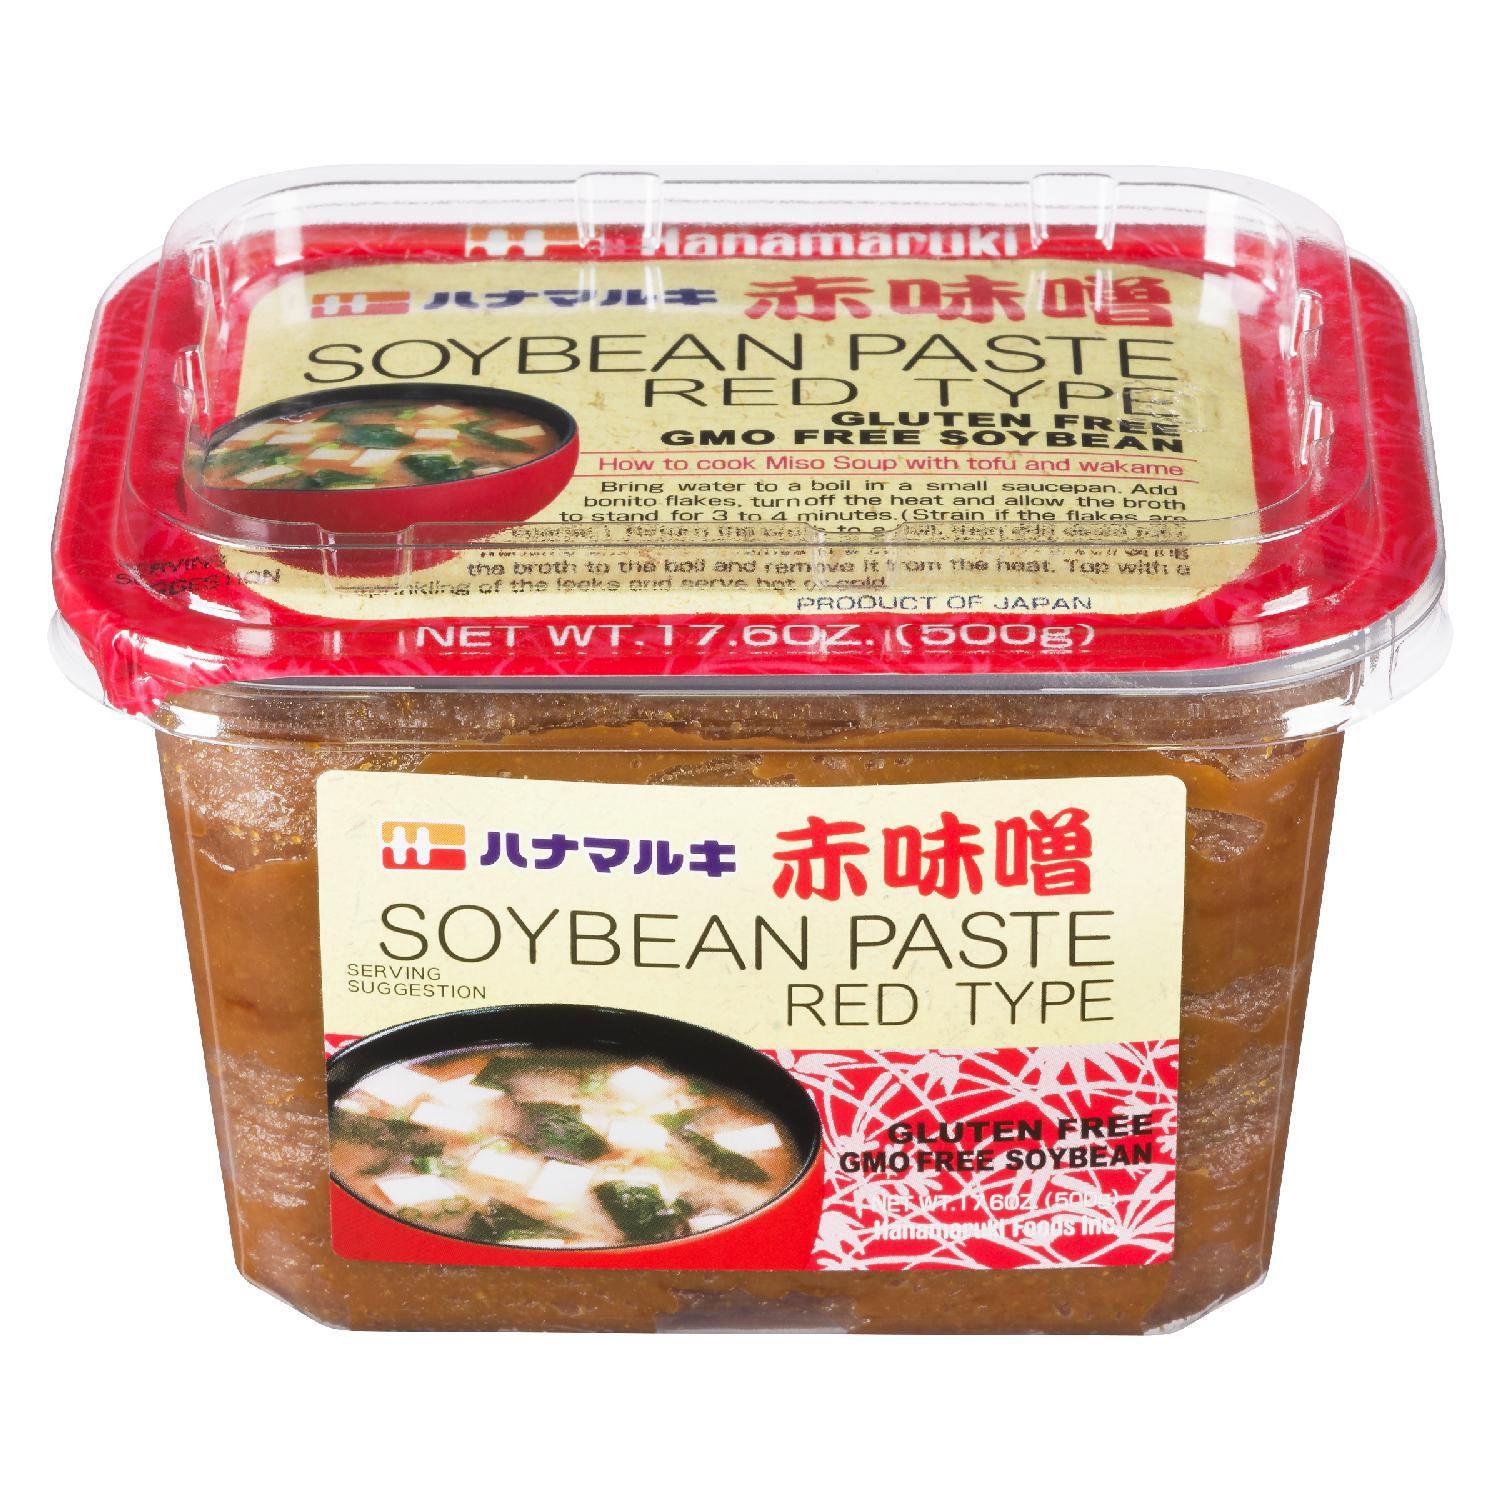 hanamaruki-soy-bean-paste-red-type